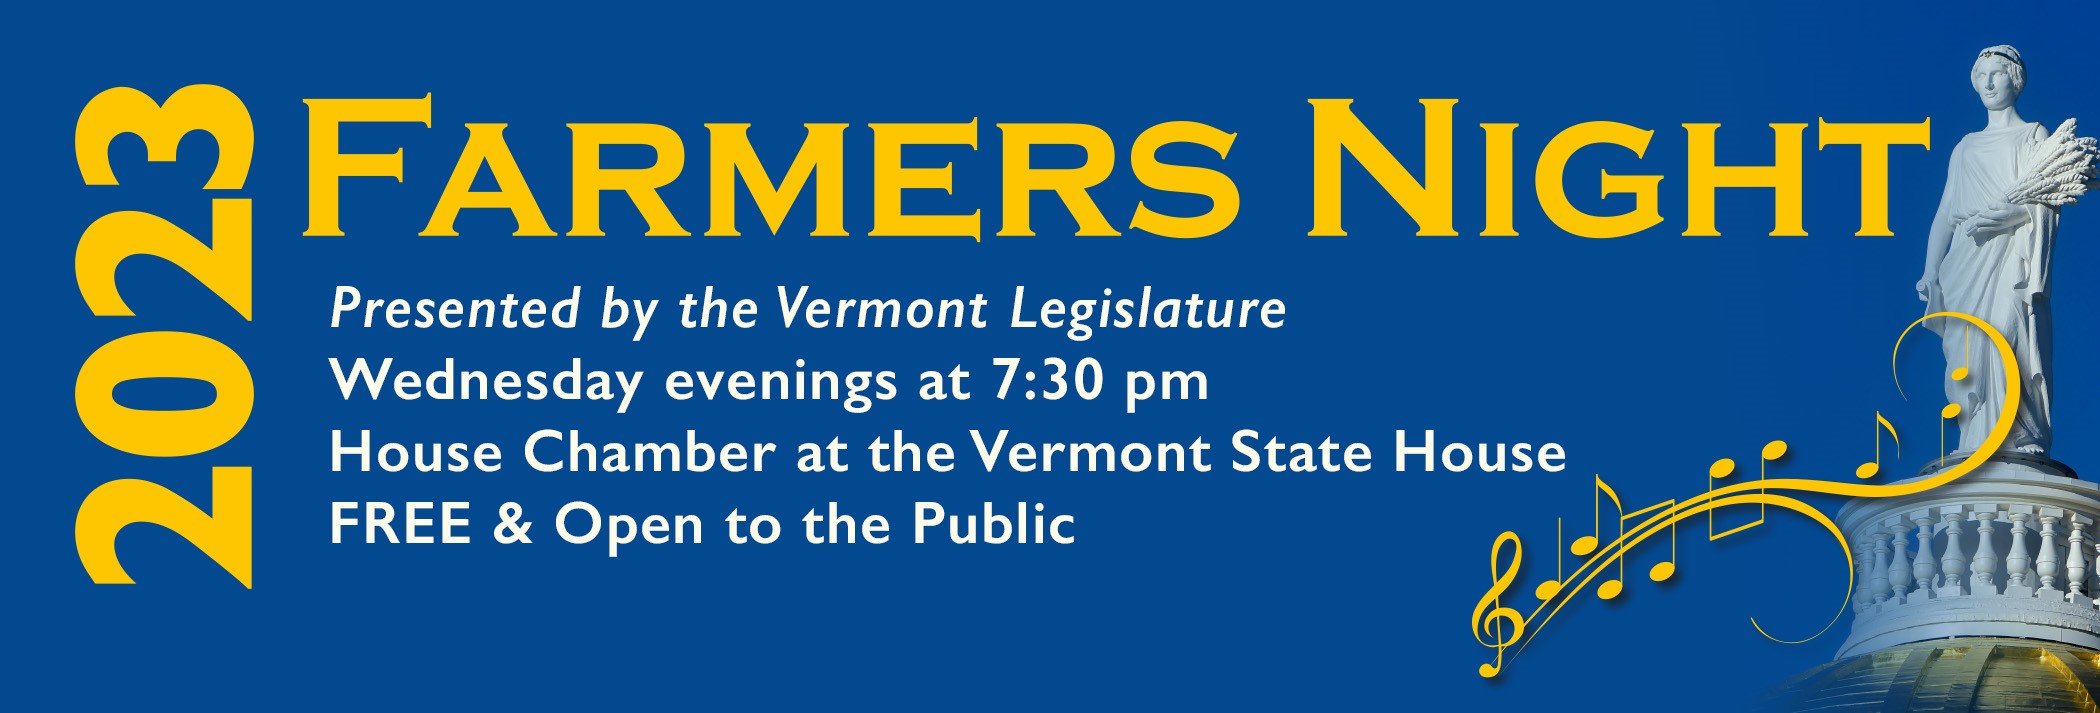 Farmers Night Concert Series Vermont General Assembly Vermont Legislature